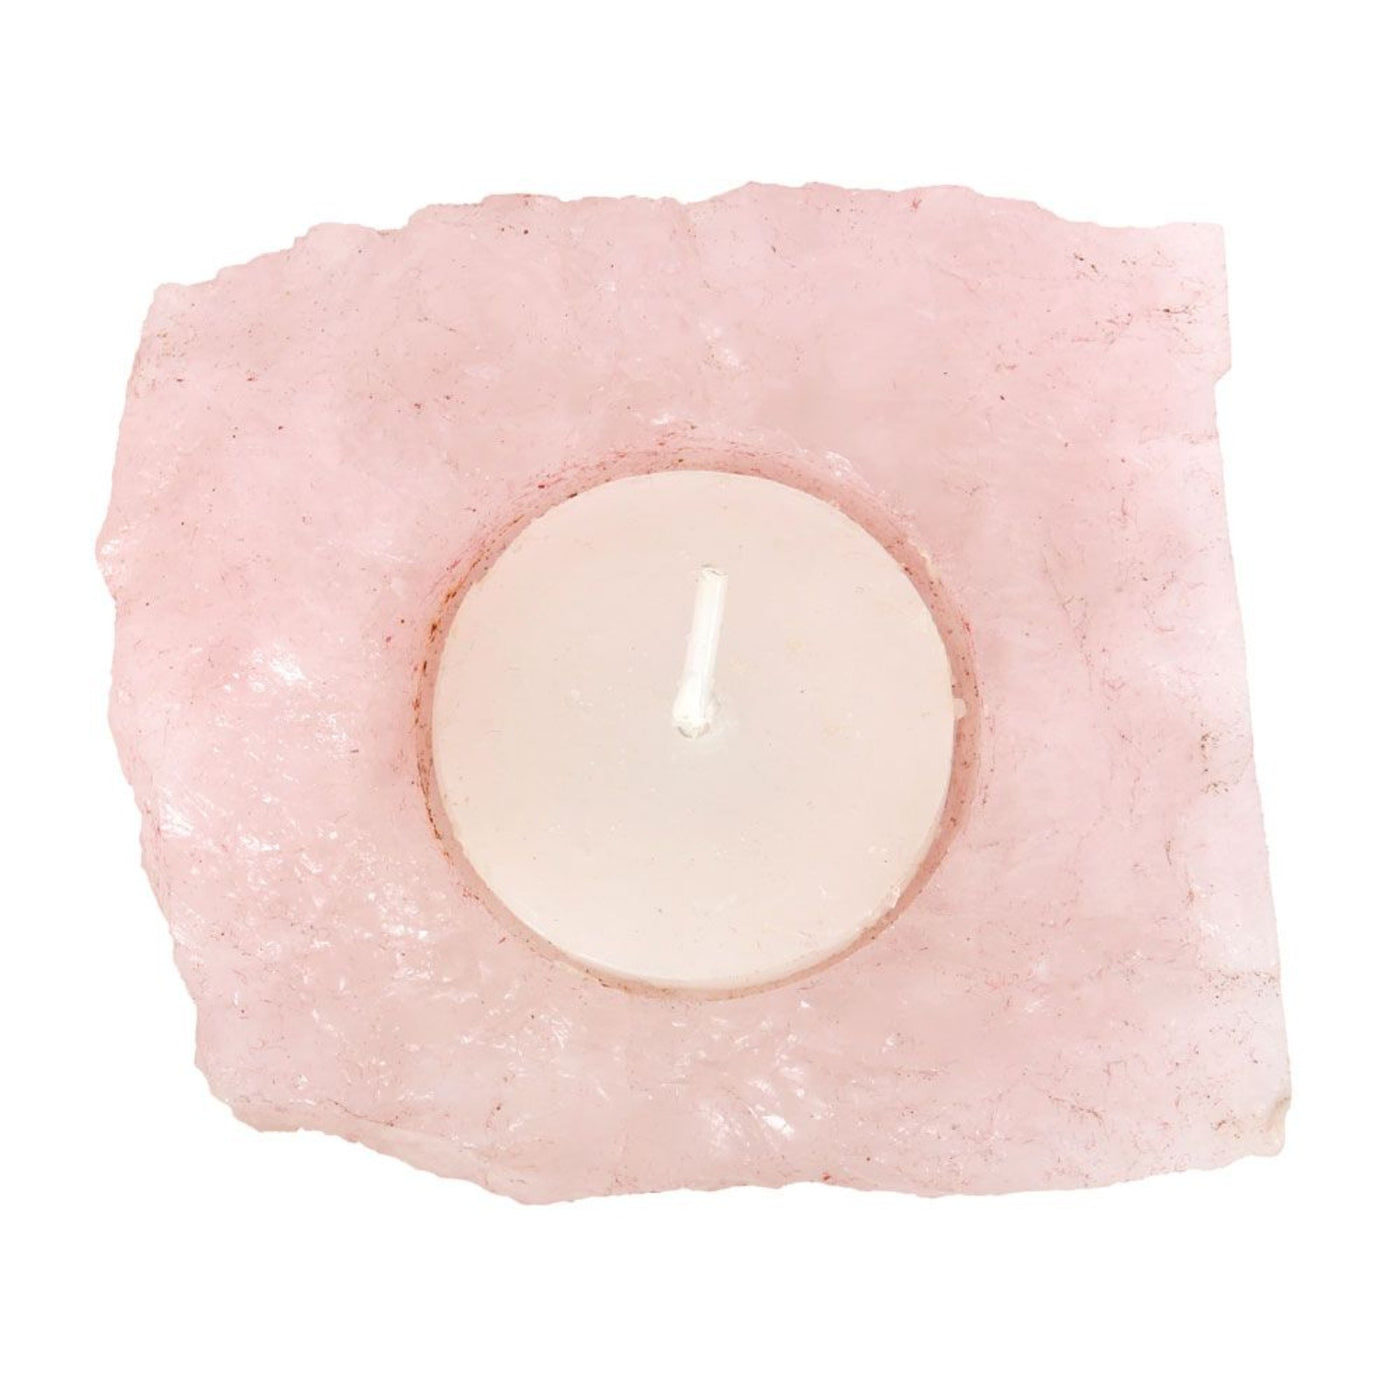 Rose Quartz Natural Raw Gemstone Tealight Candle Holder.